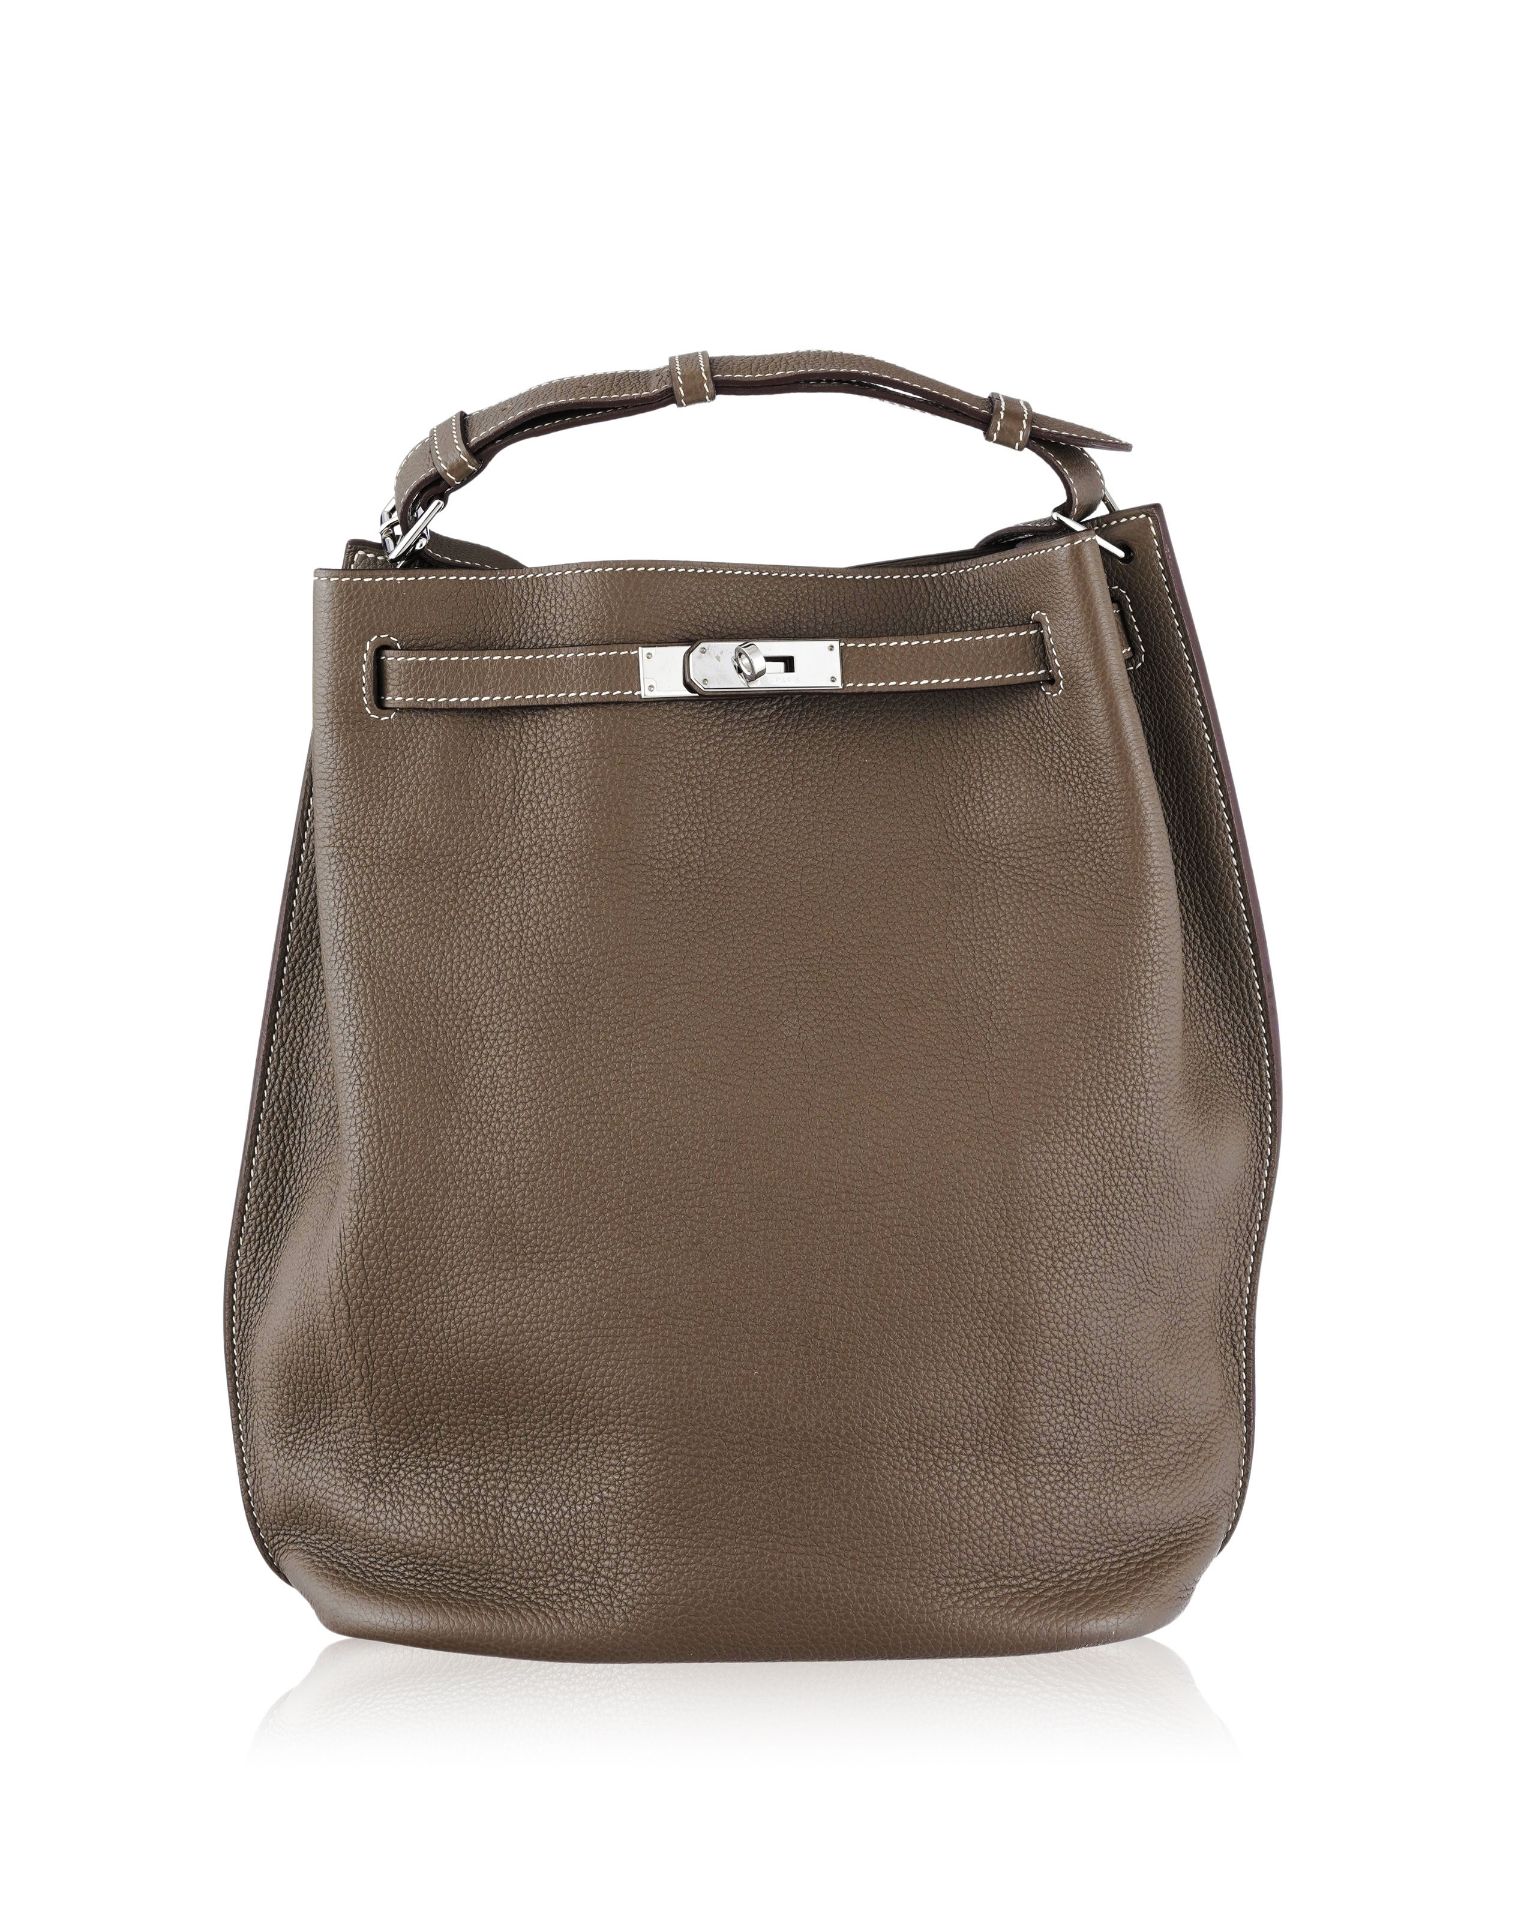 Hermès, sac So Kelly 26 en cuir Togo Etoupe, bouclerie palladium, 35x26 cm